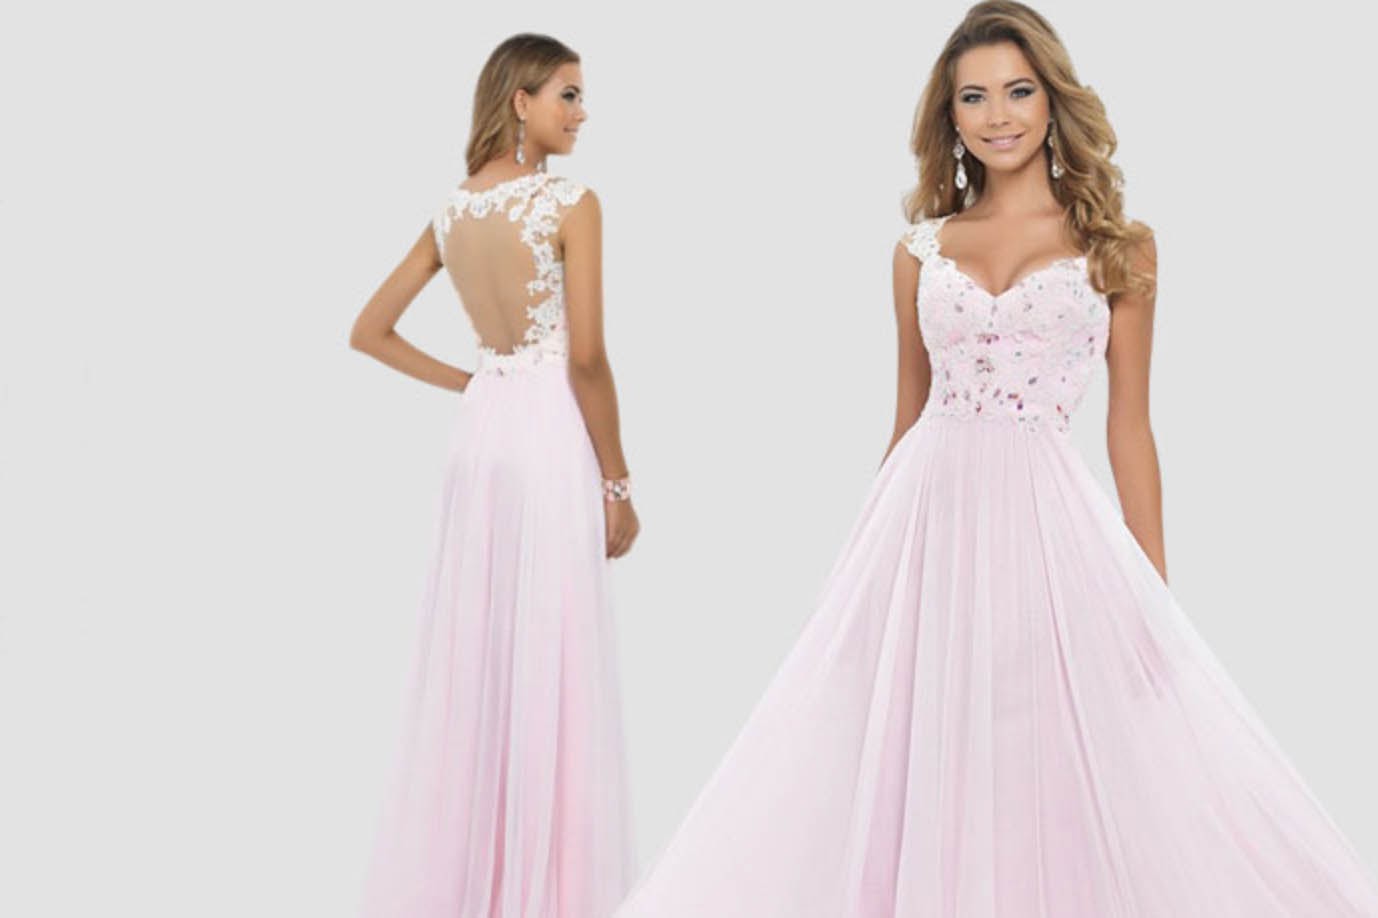 fashion style blogger italian girl italy vogue glamour rosa pink dress vestito cerimonie matrimonio wedding inpromdress princess 